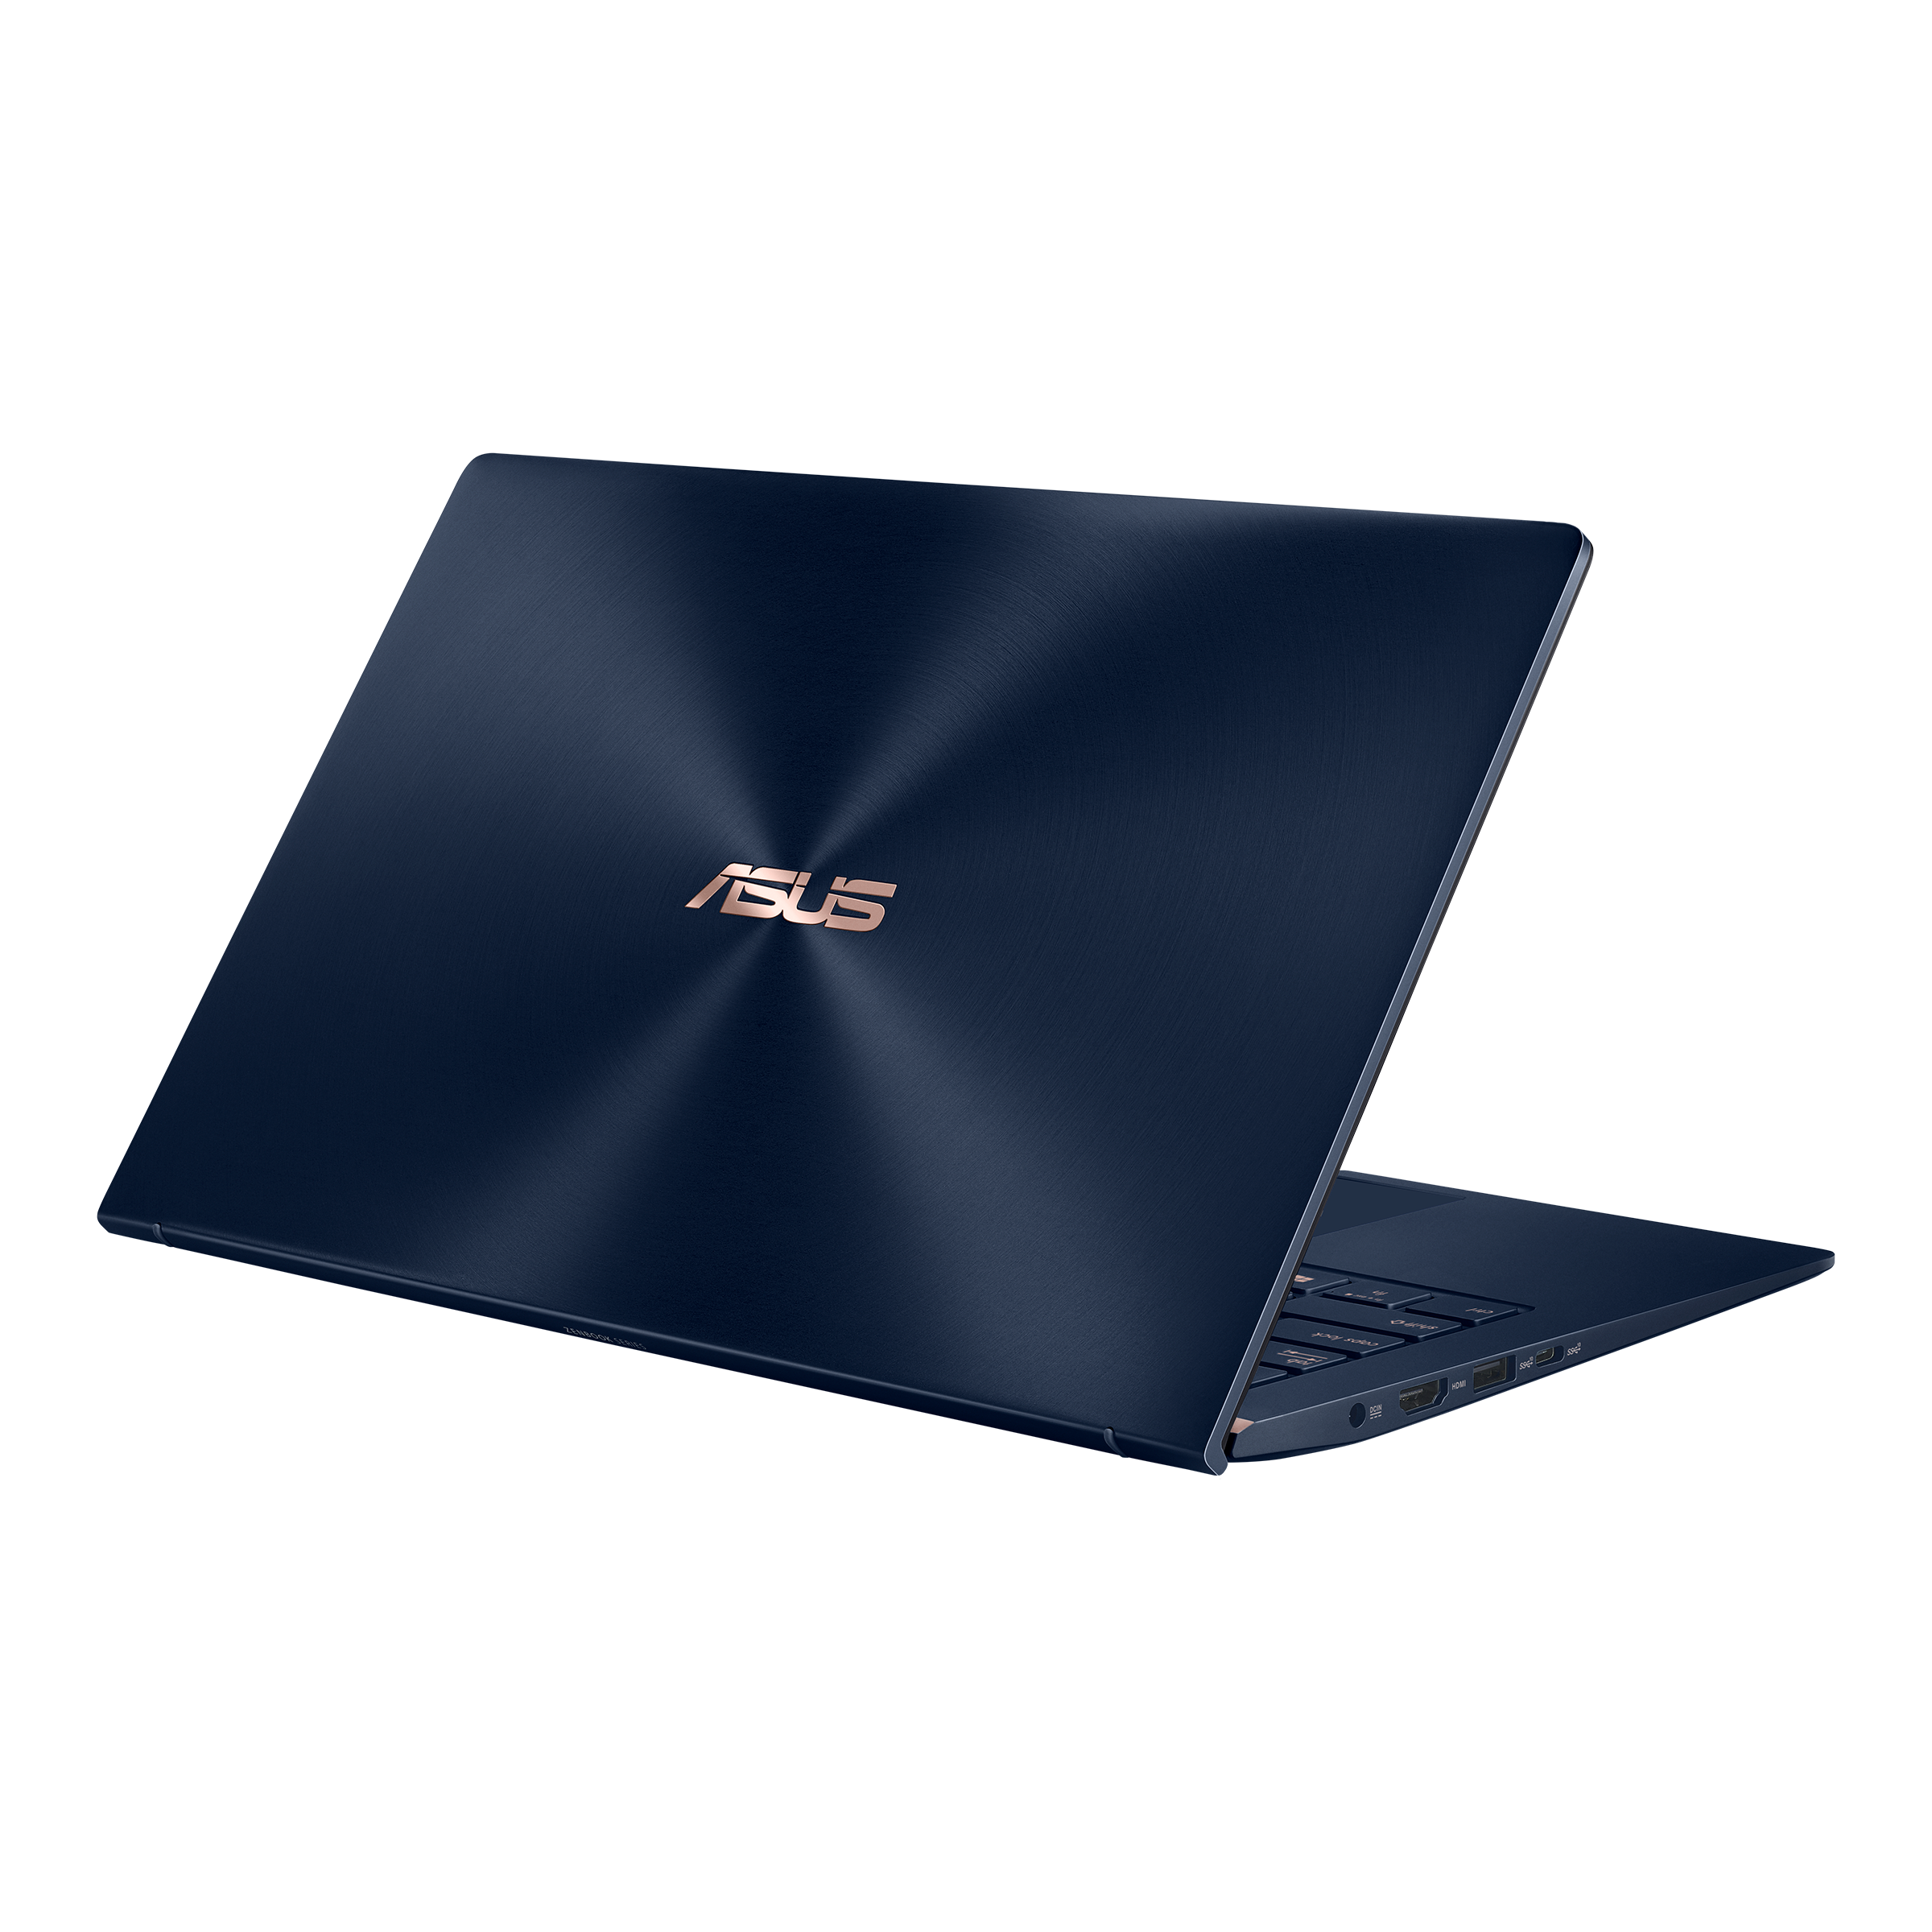 Zenbook 13 UX333｜Laptops For Home｜ASUS Global